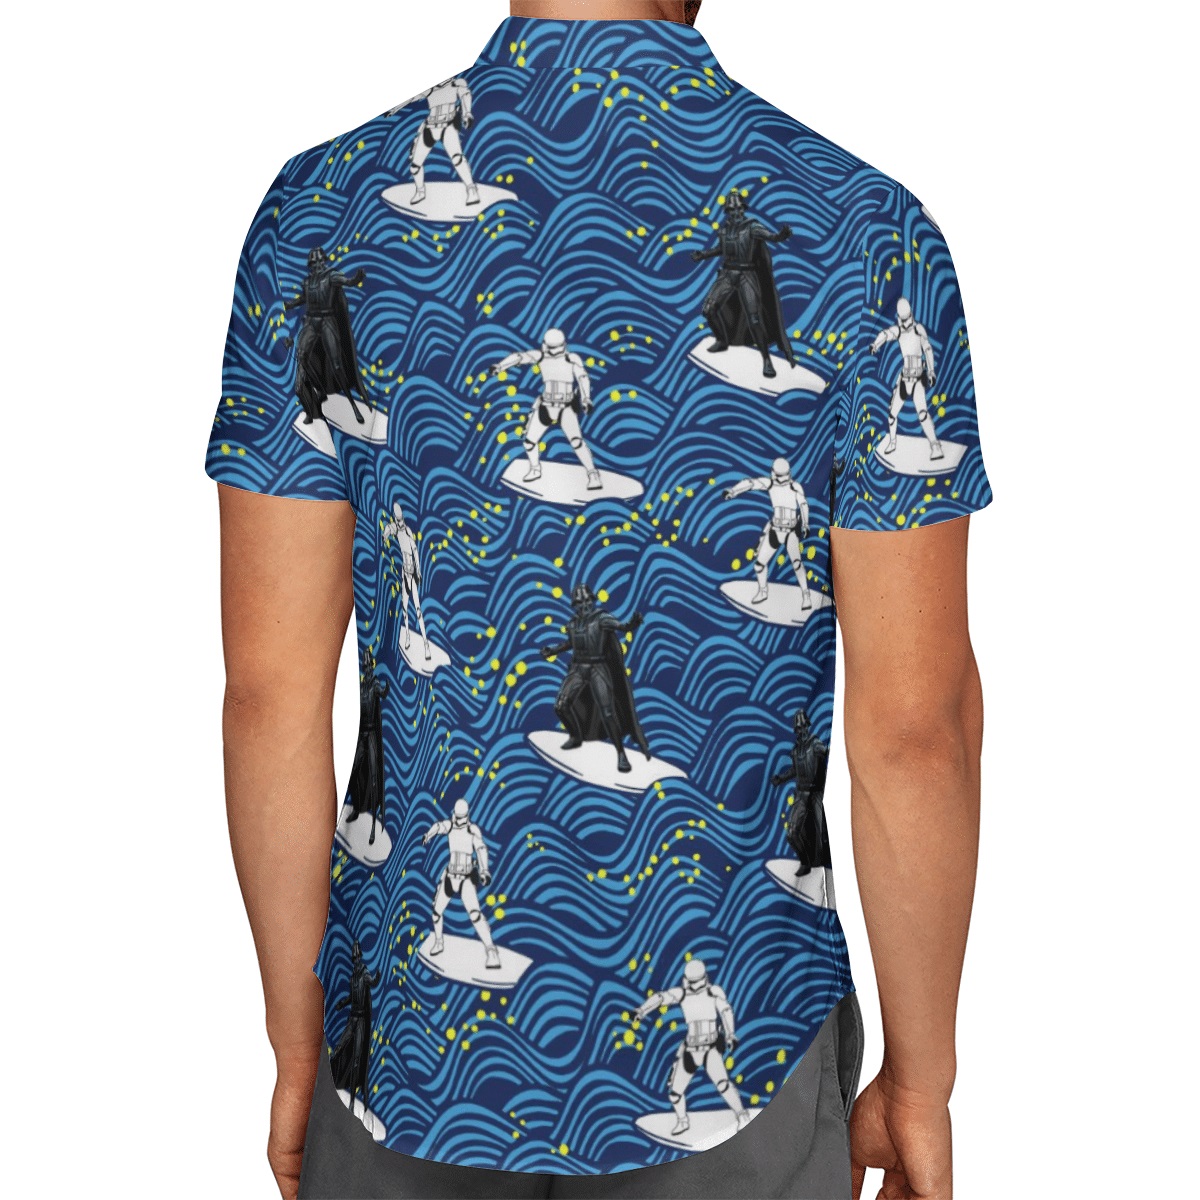 Star Wars Darth Vader Stormtrooper Surfing hawaiian shirt and short sleeve shirt - Picture 2